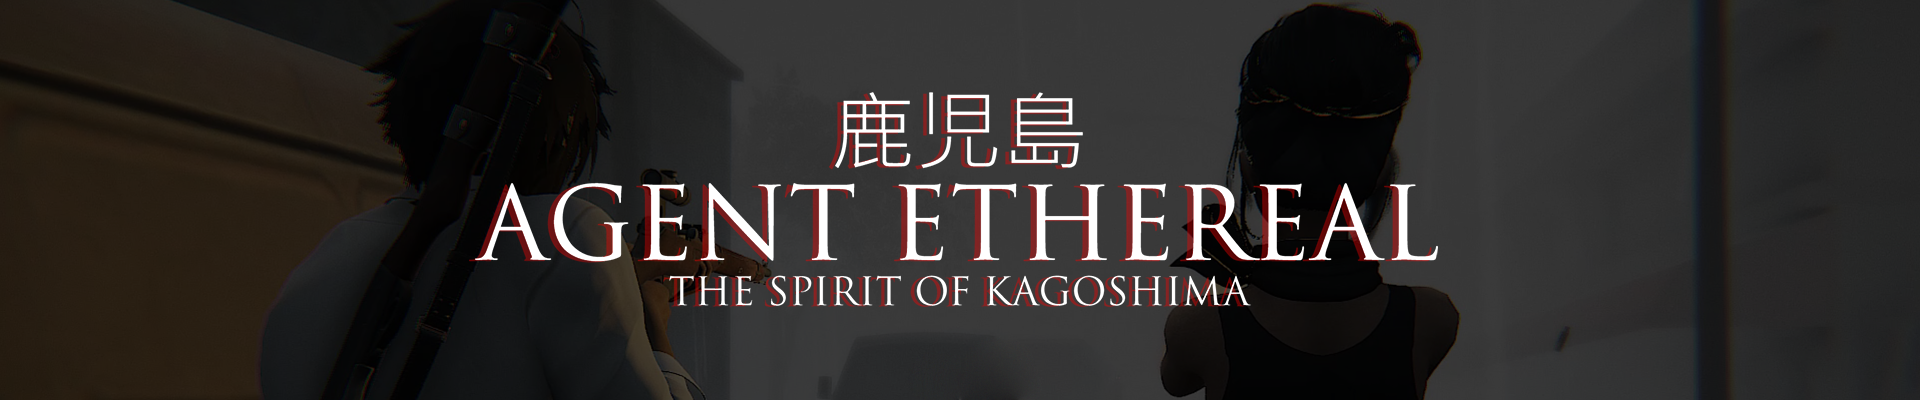 Agent Ethereal - The Spirit of Kagoshima poster